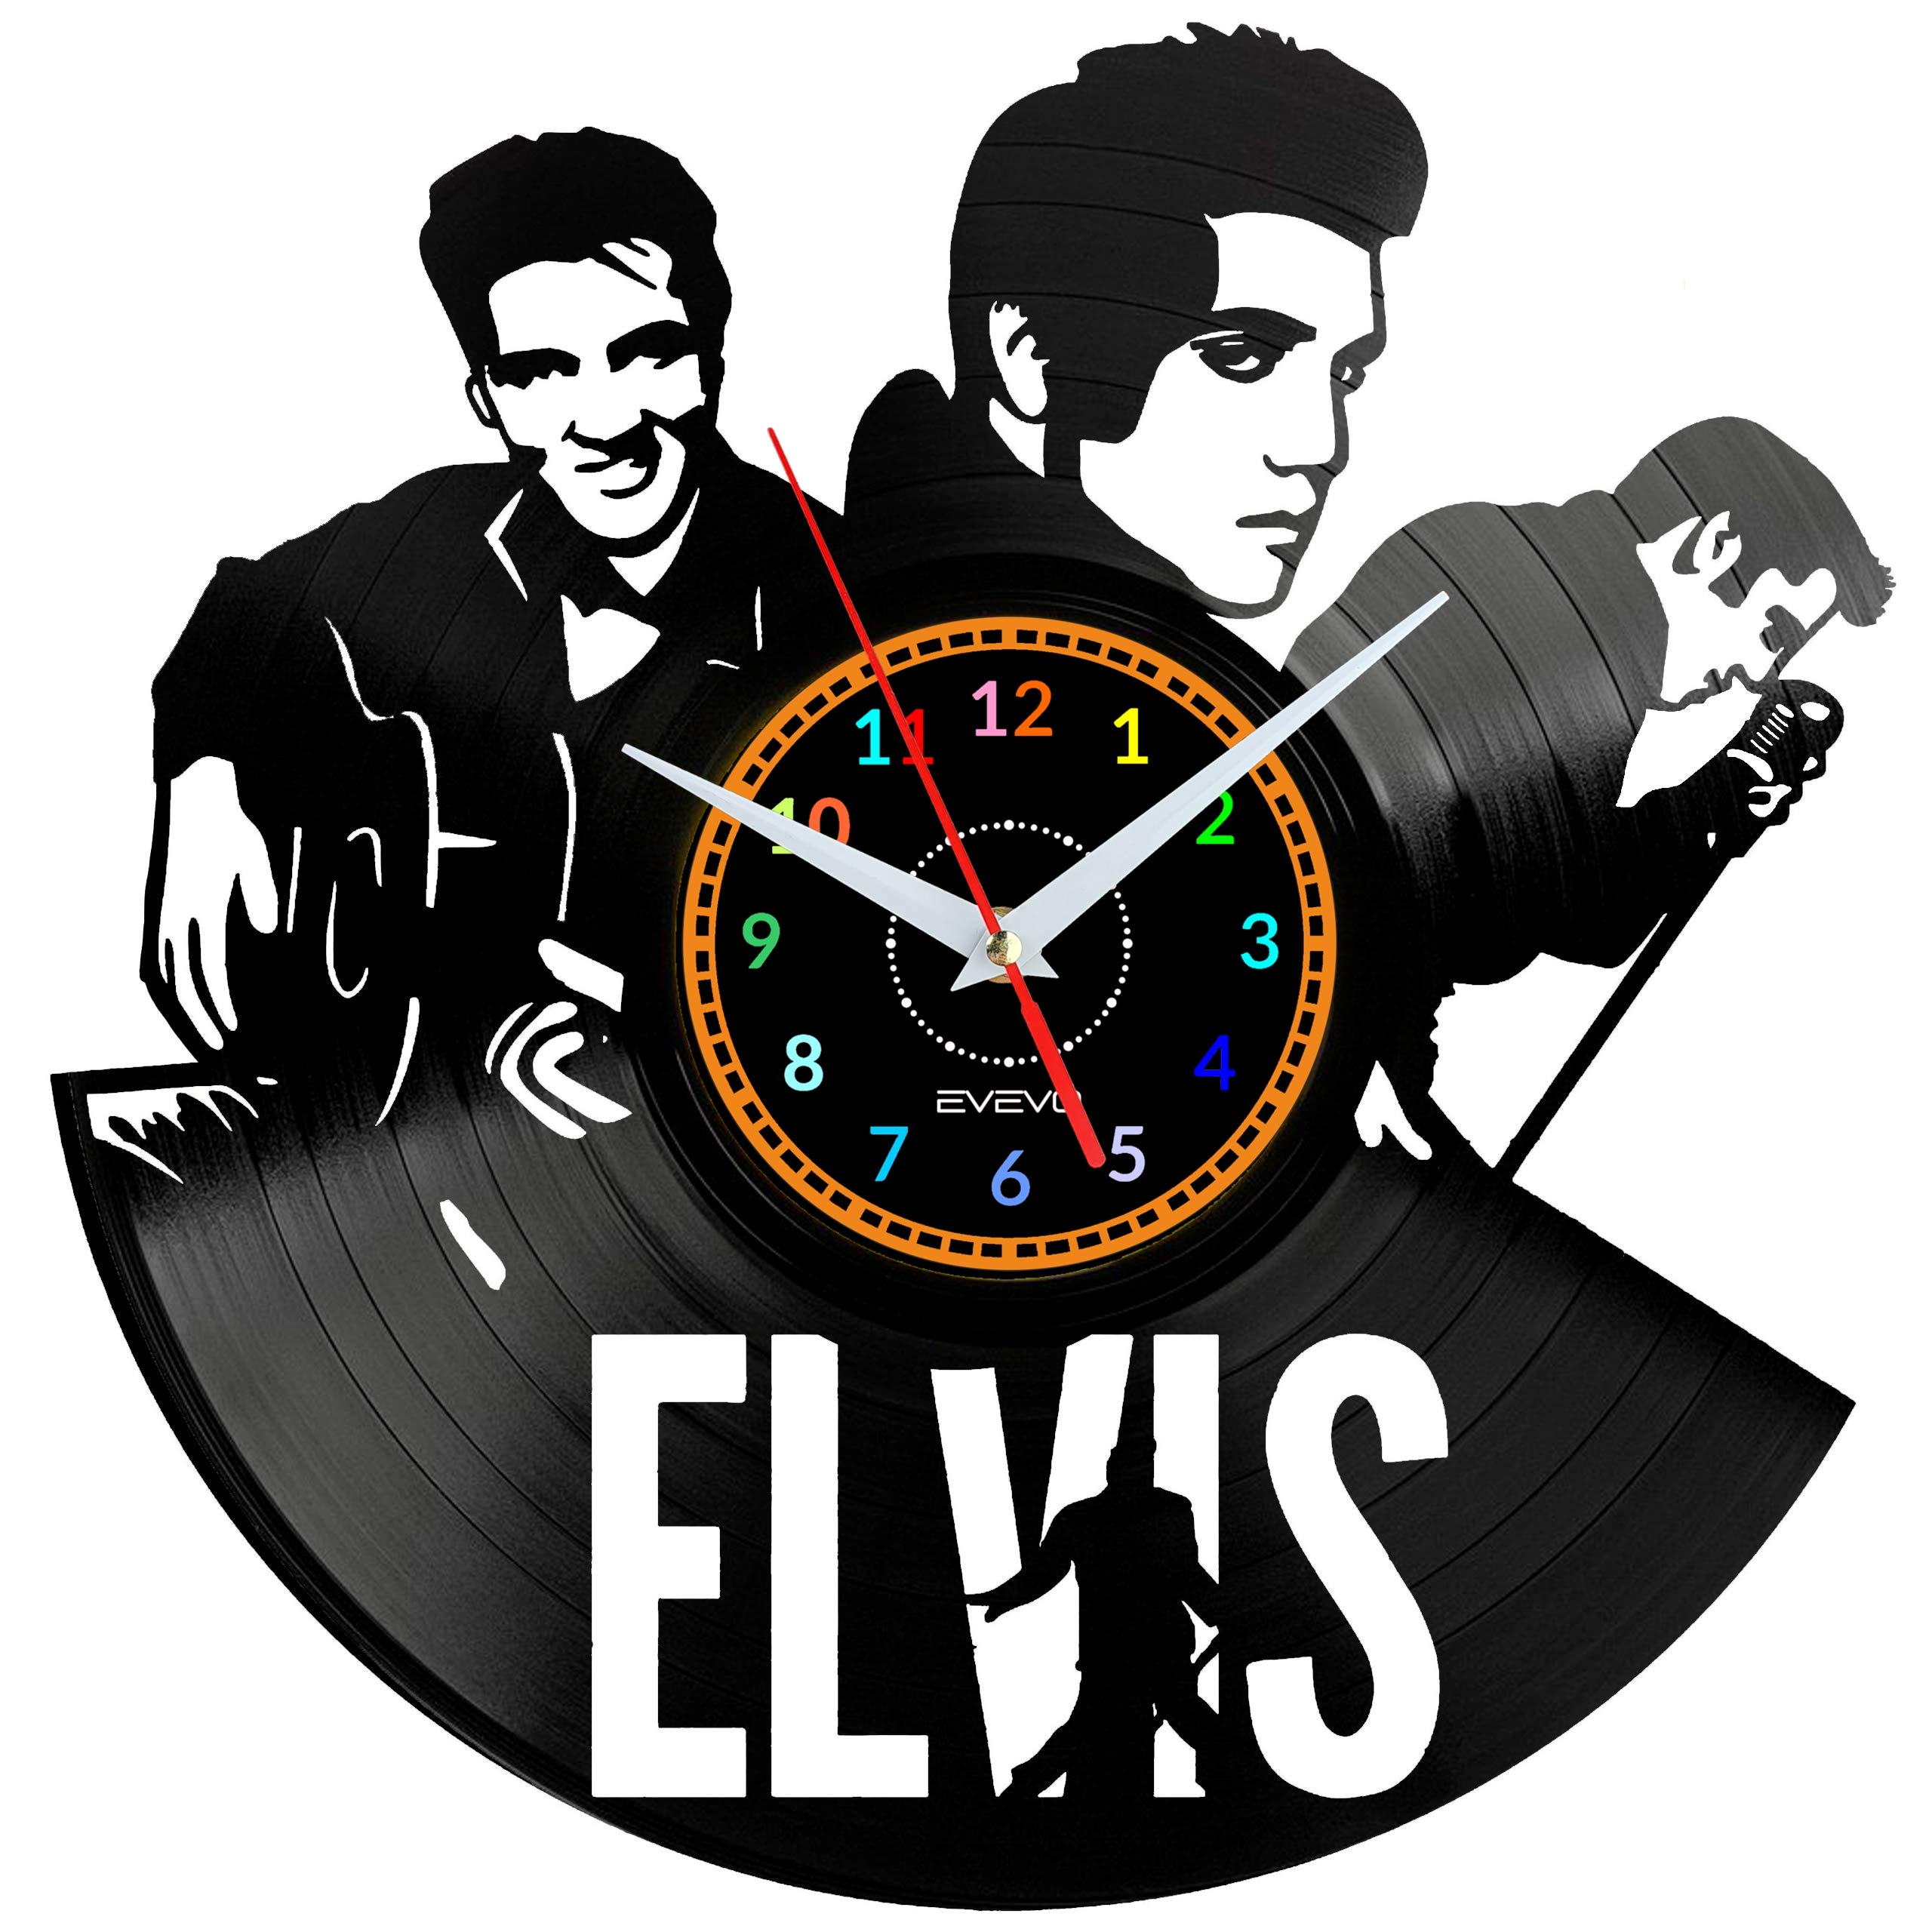 Elvis Presley Wanduhr Vinyl Schallplatte Retro-Uhr Handgefertigt Vintage-Geschenk Style Raum Home Dekorationen Tolles Geschenk Wanduhr Elvis Presley